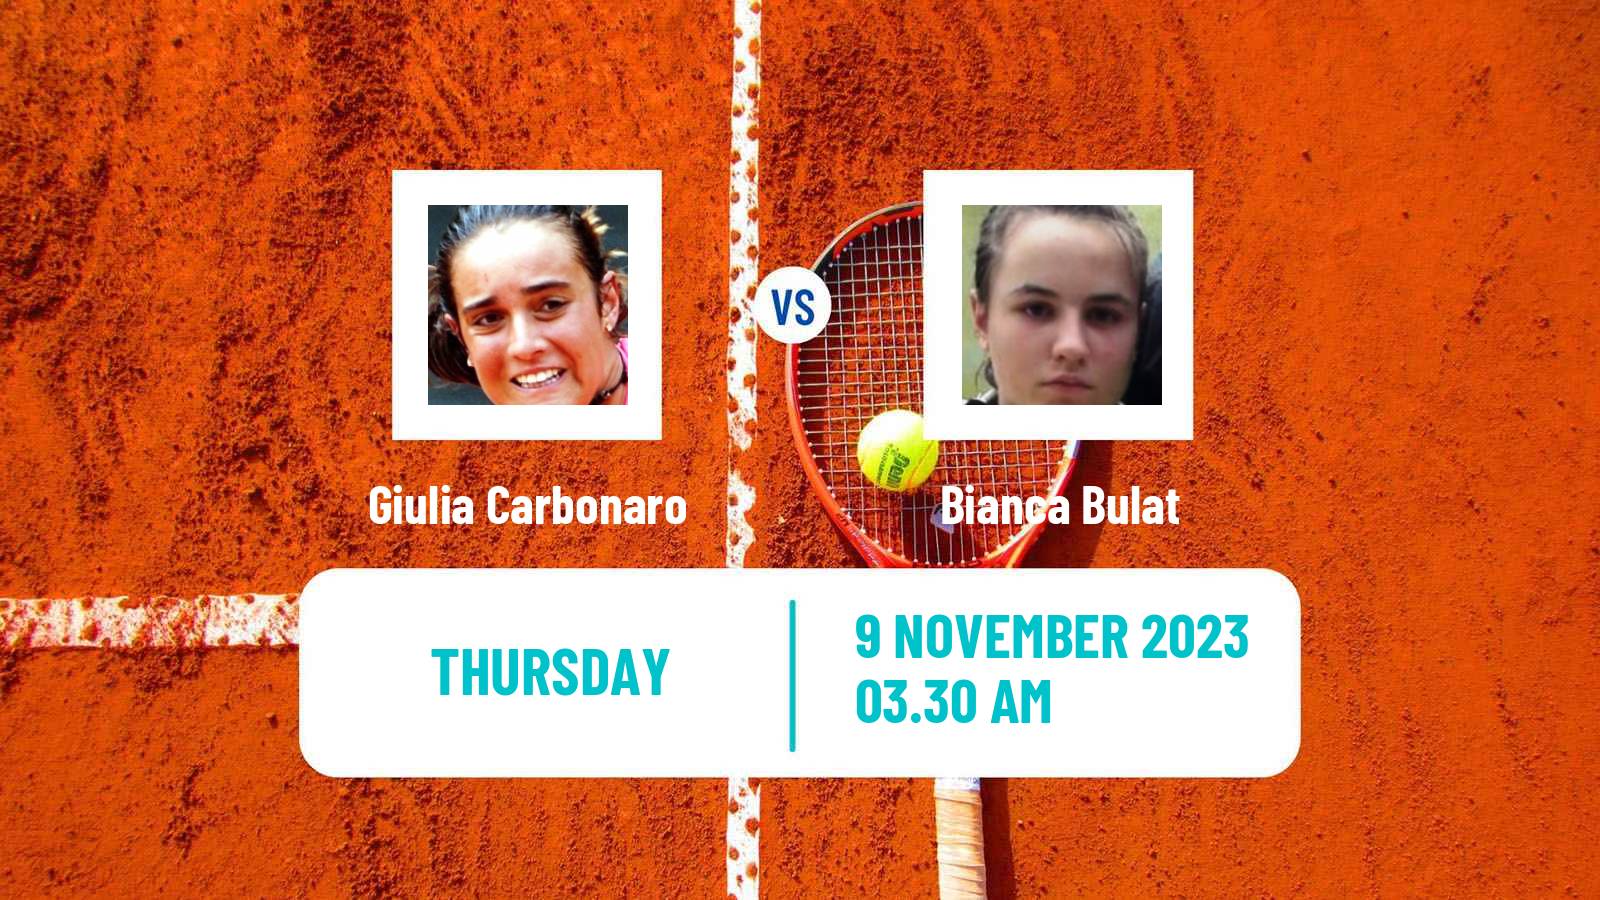 Tennis ITF W15 Antalya 17 Women Giulia Carbonaro - Bianca Bulat